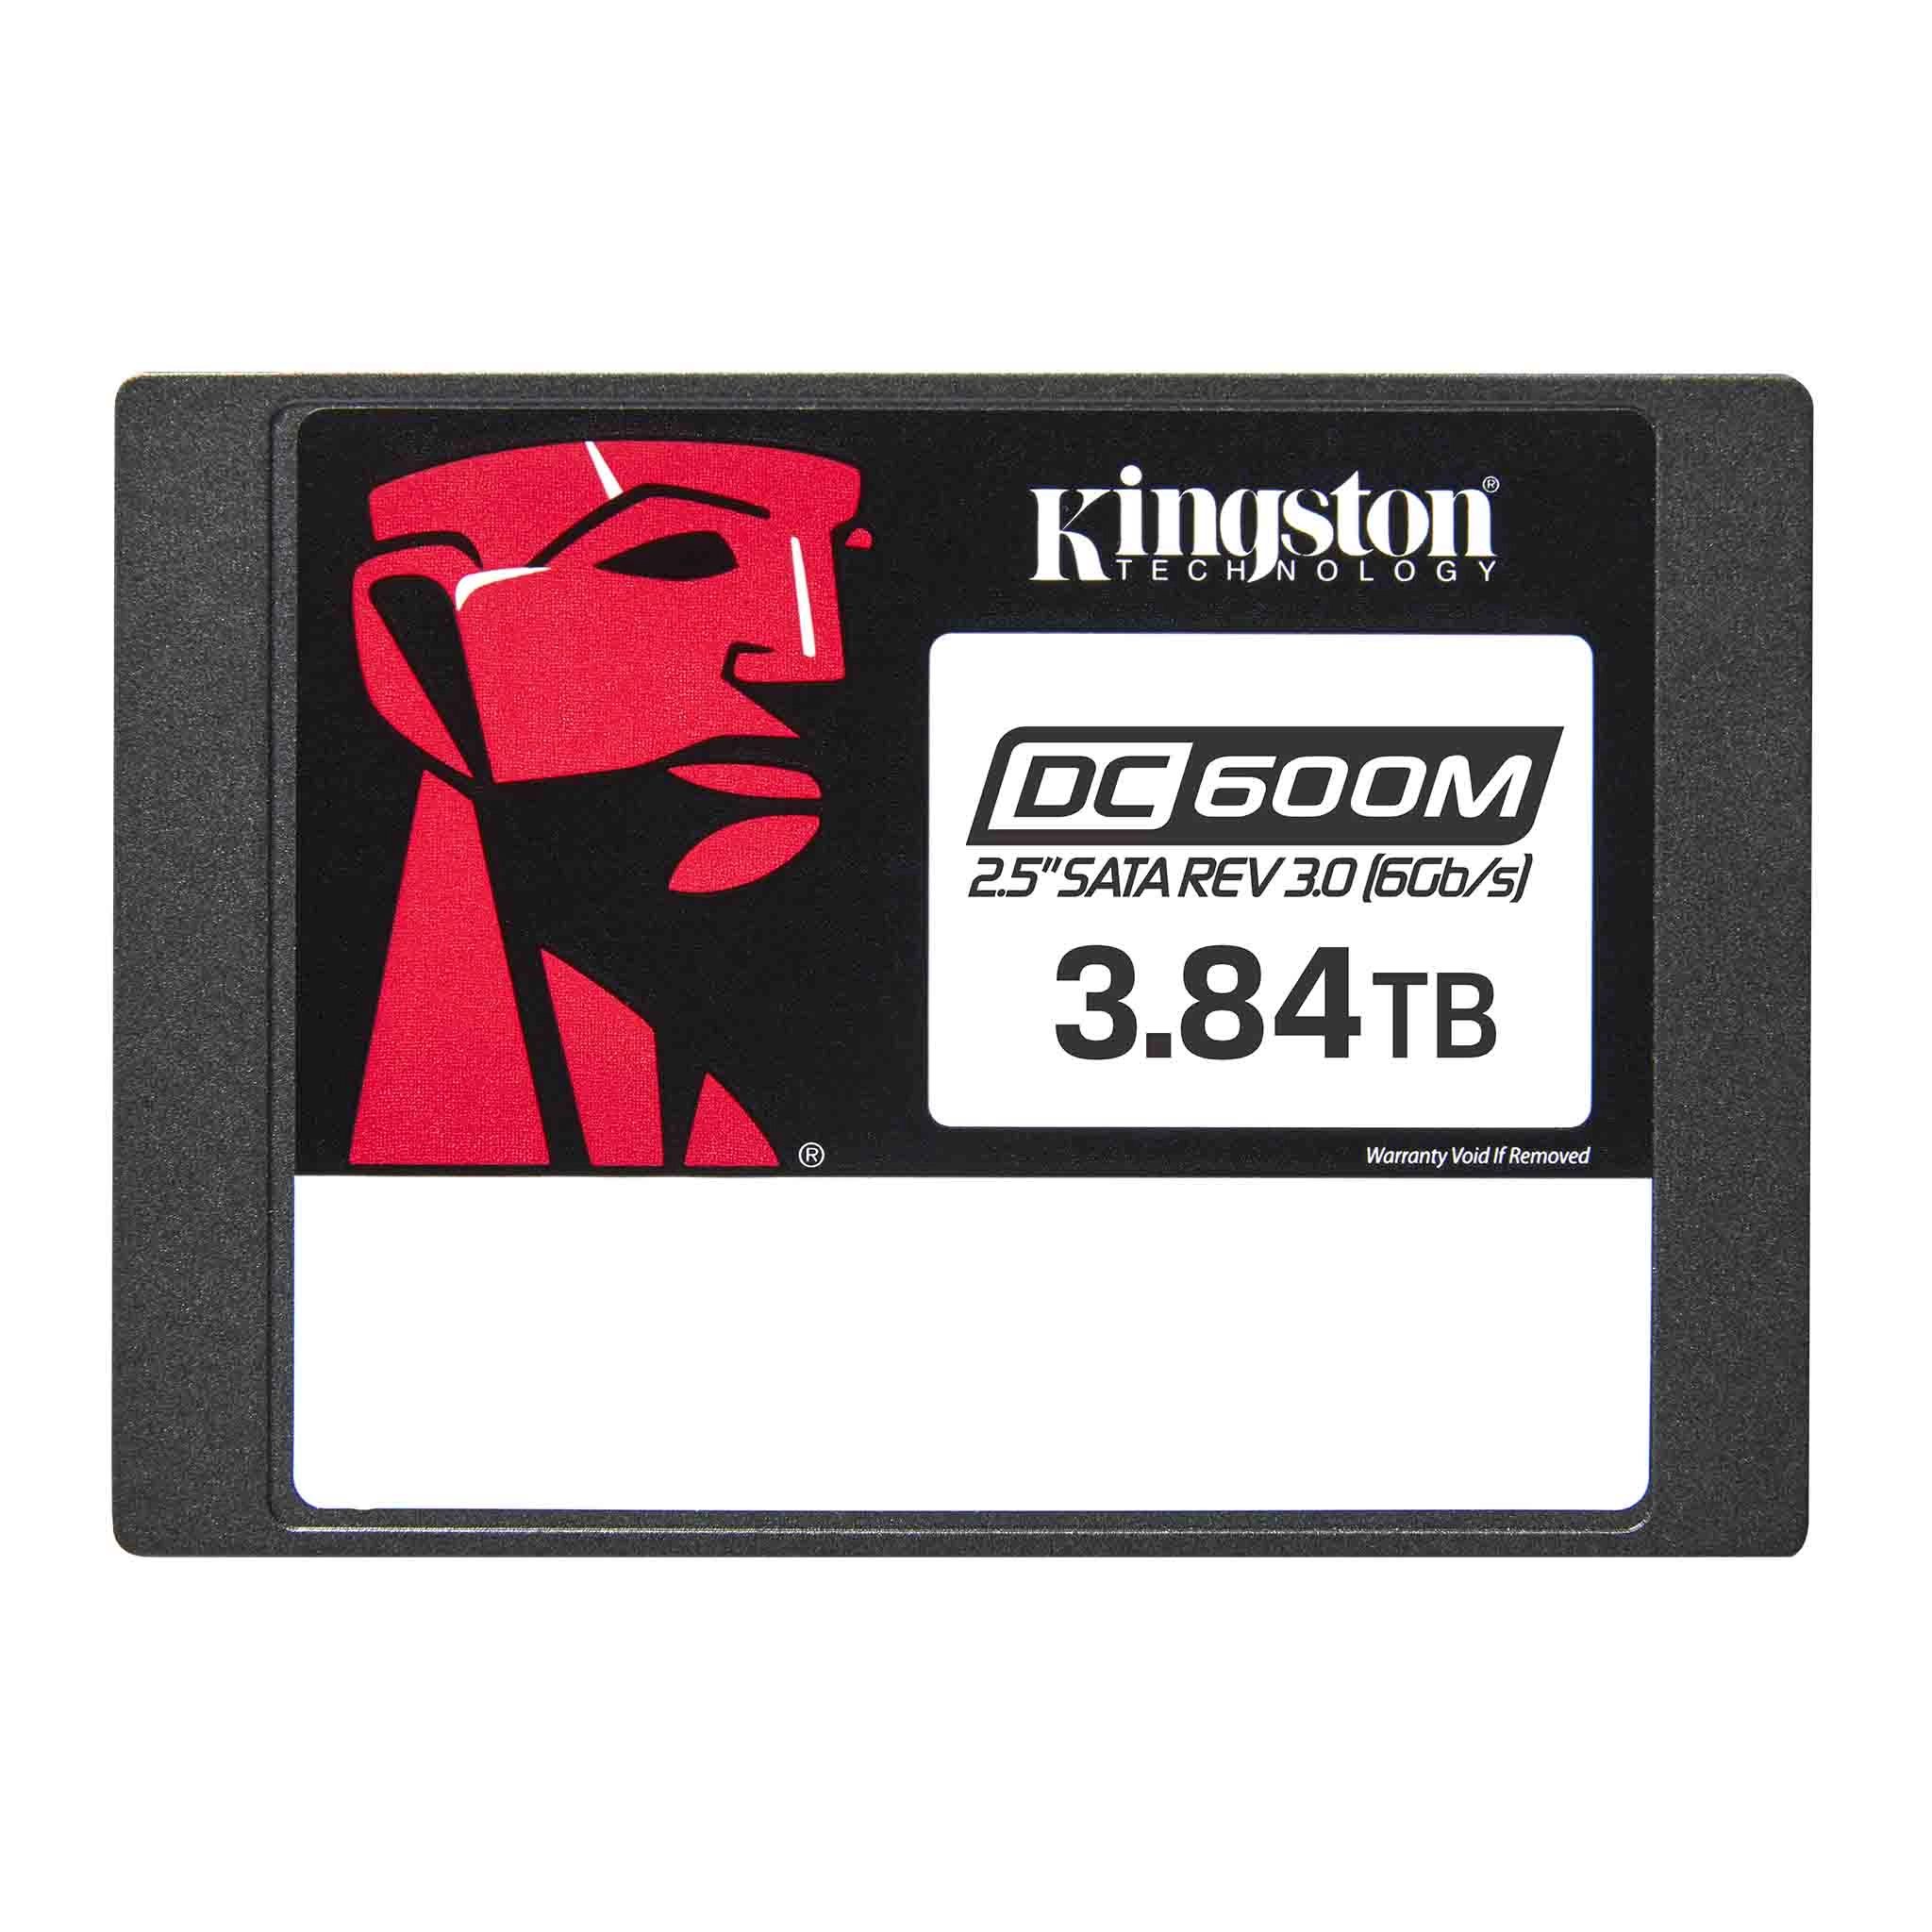 Kingston DC600M - SSD - Mixed Use - verschlüsselt - 3.84 TB - intern - 2.5"